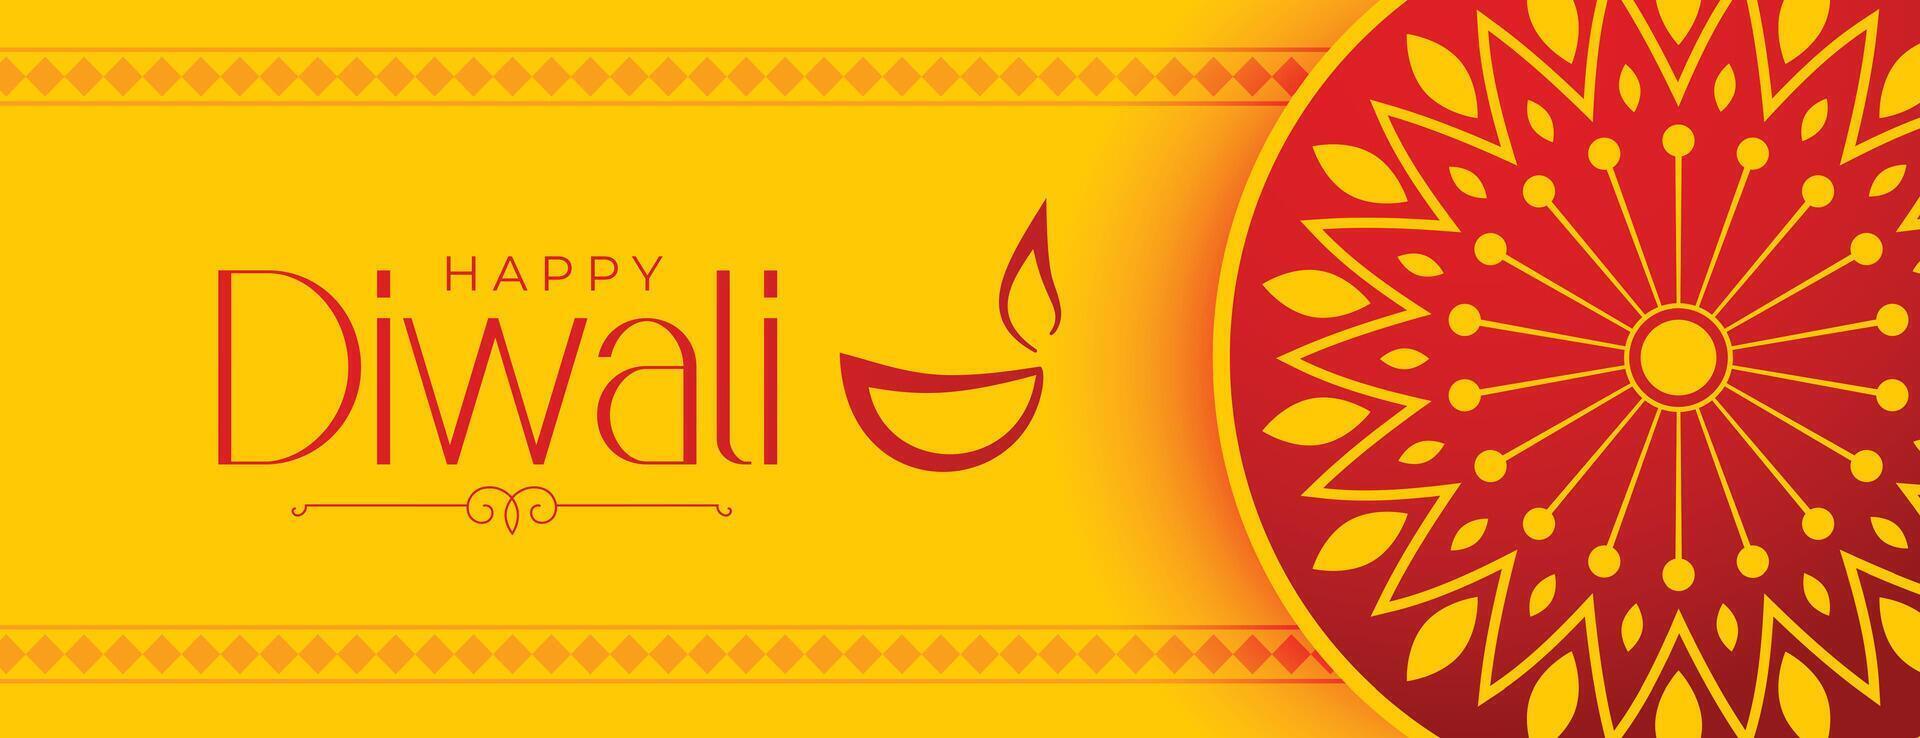 tradicional feliz diwali ocasião bandeira dentro indiano estilo vetor